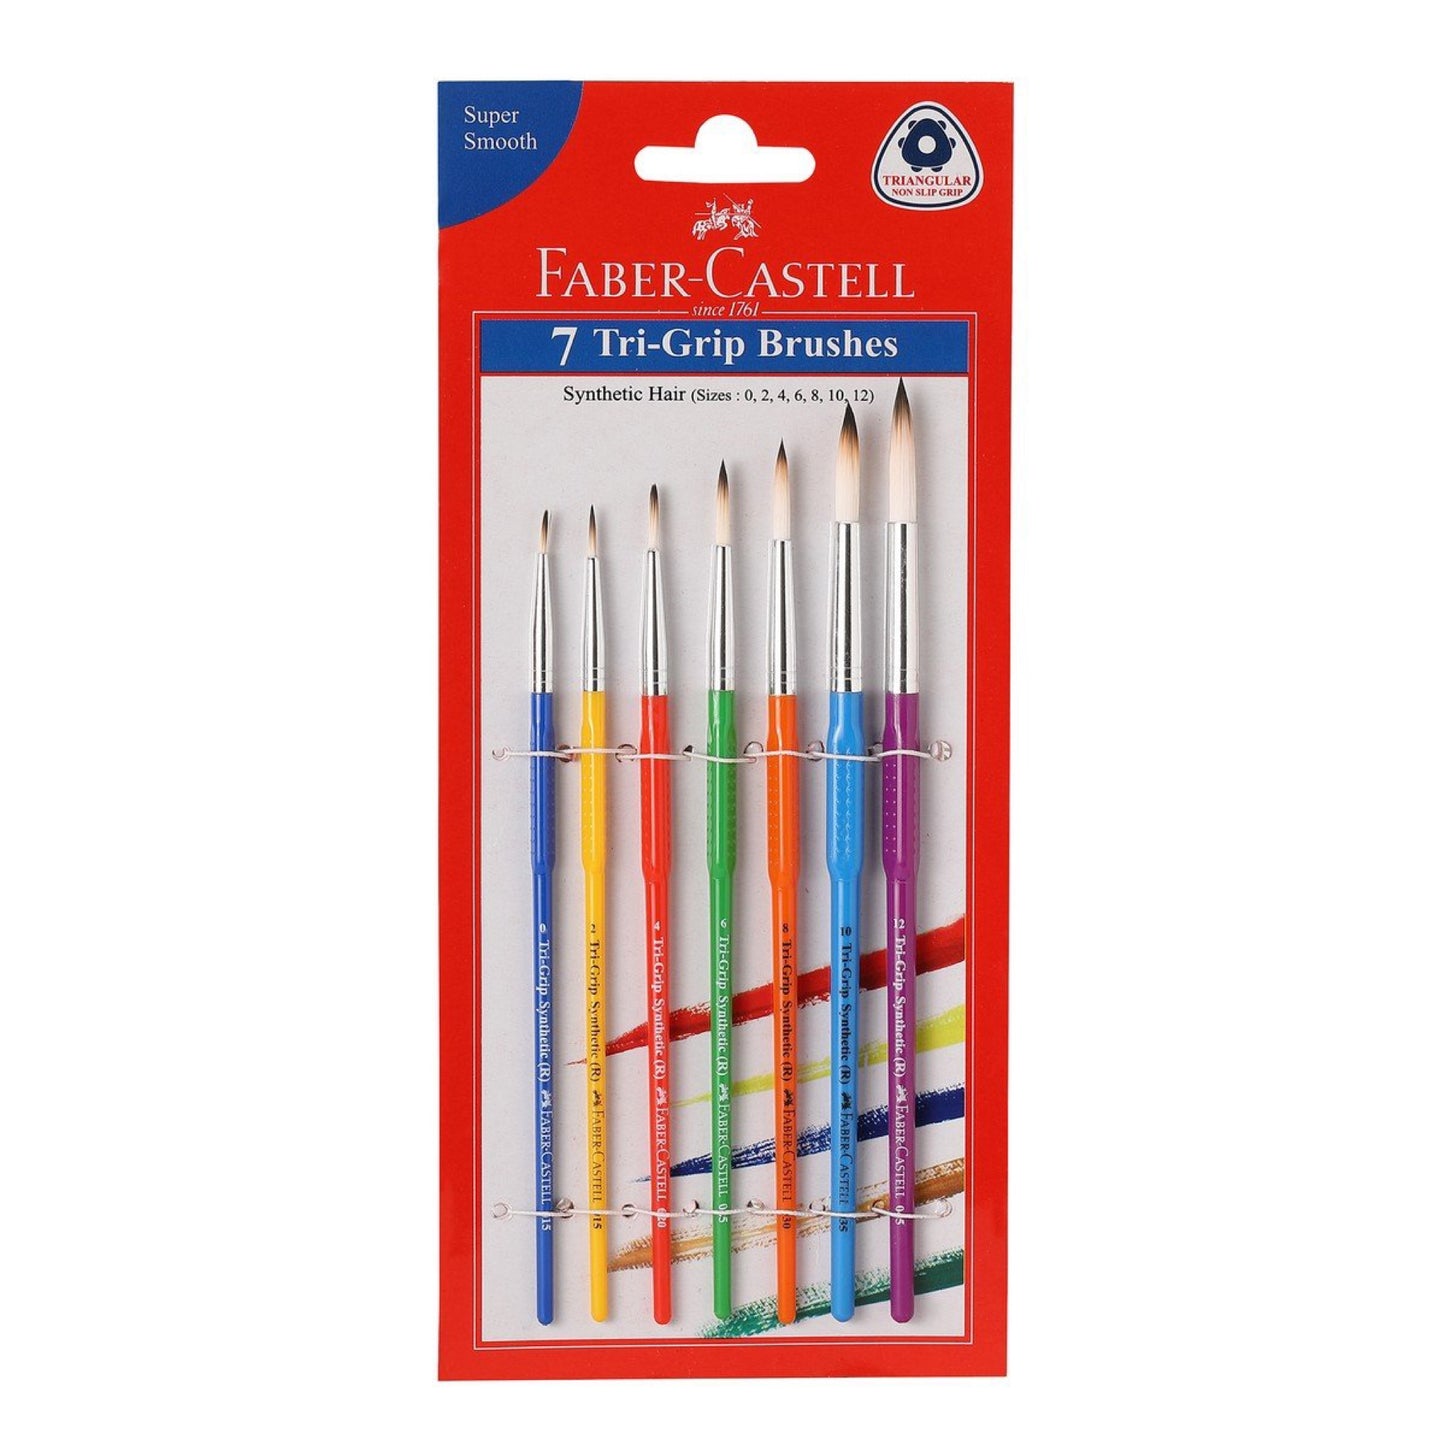 Faber Castell Tri Grip Paint Brushes, Round, Pack of 7 || فايبر كاستل - فرش طلاء ثلاثية القبضة ، مستديرة ، عبوة من  فرش7